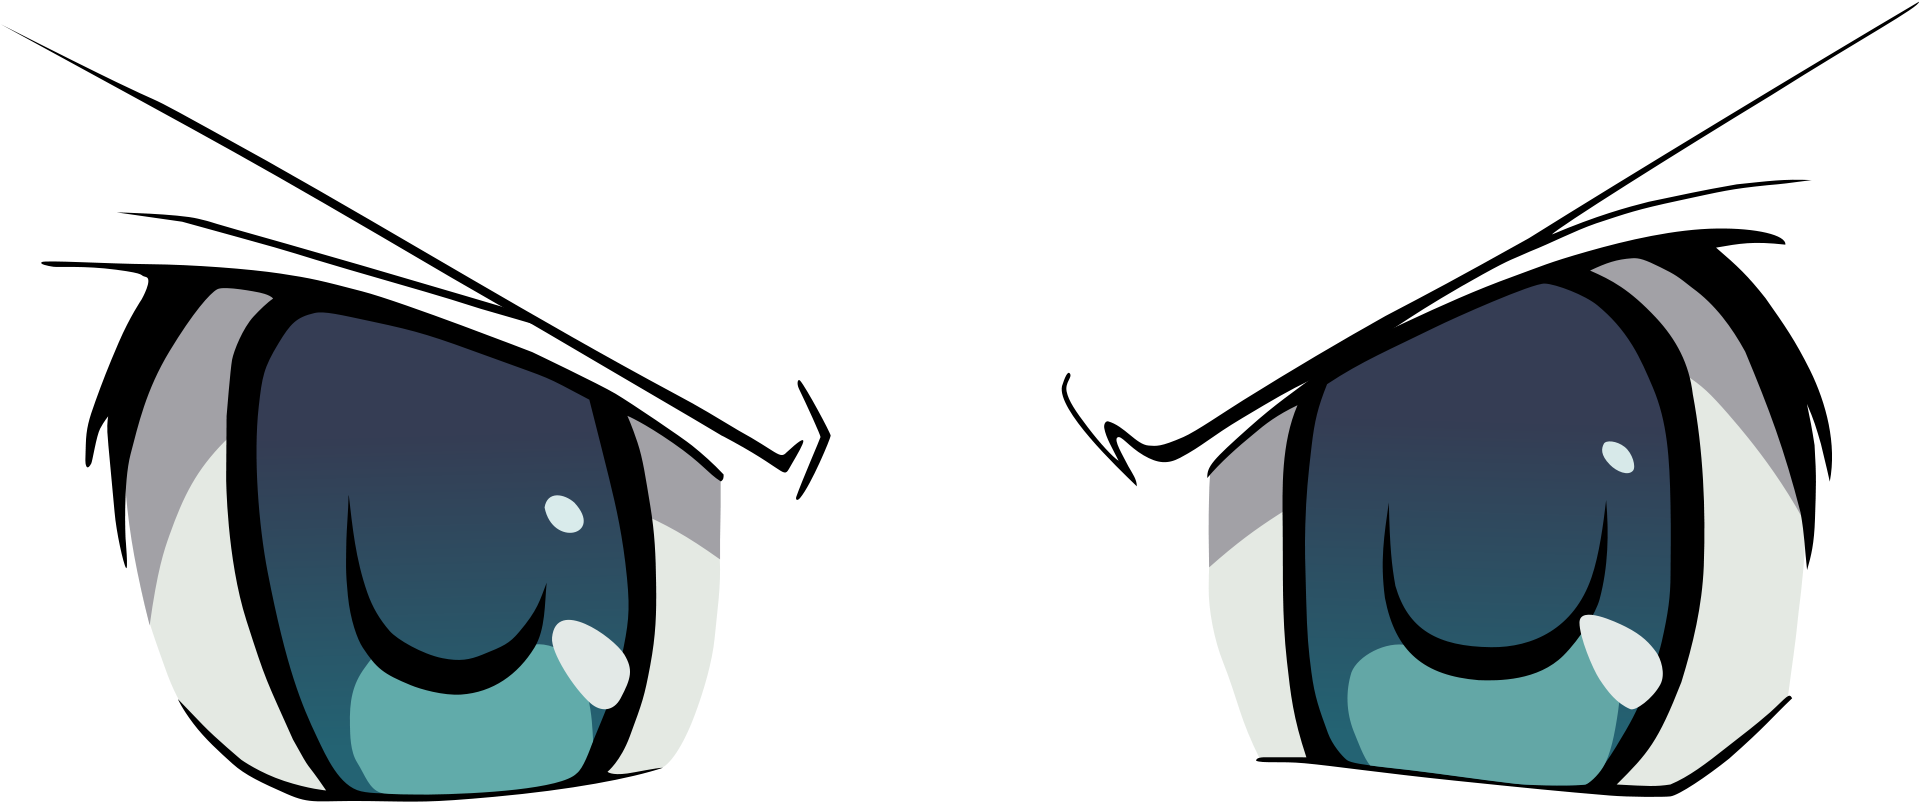 Transparent Anime Eyes Png Transparent - Transparent Angry Eyes